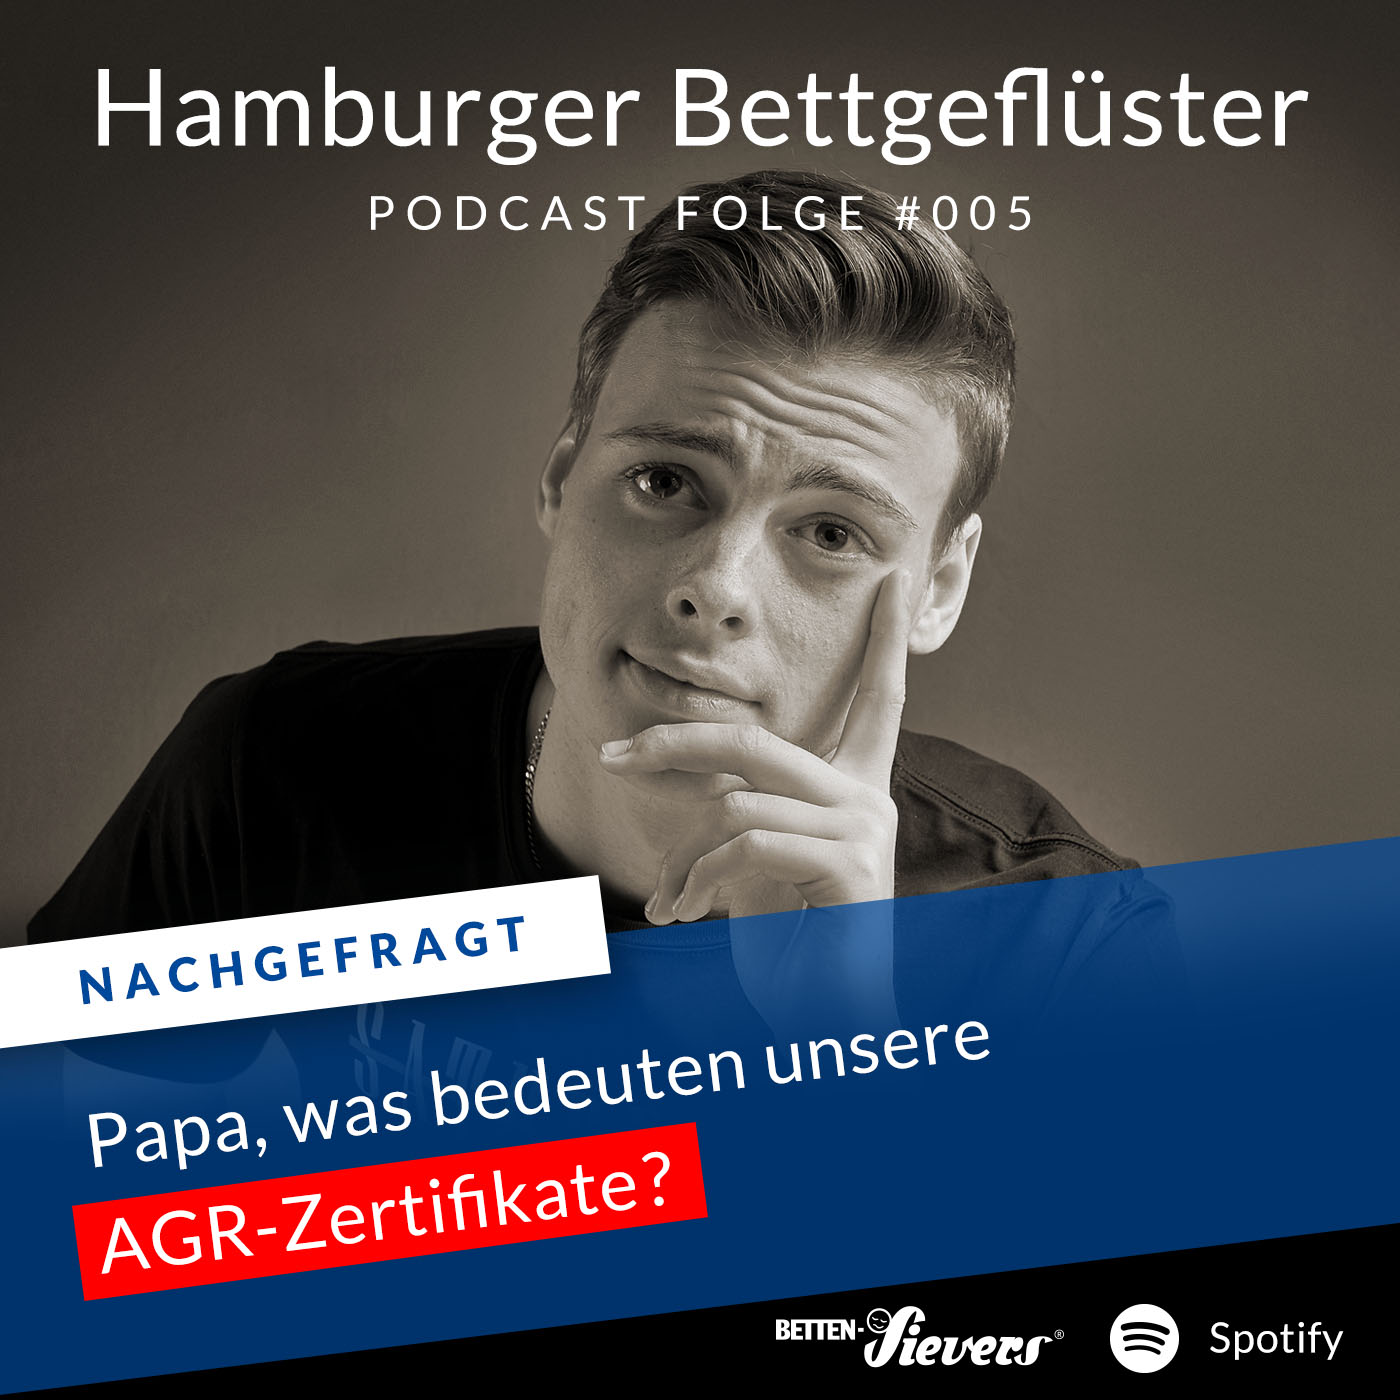 Folge#005 Podcast Hamburger Bettgefluester. Papa, was bedeuten unsere AGR-Zertifikate?